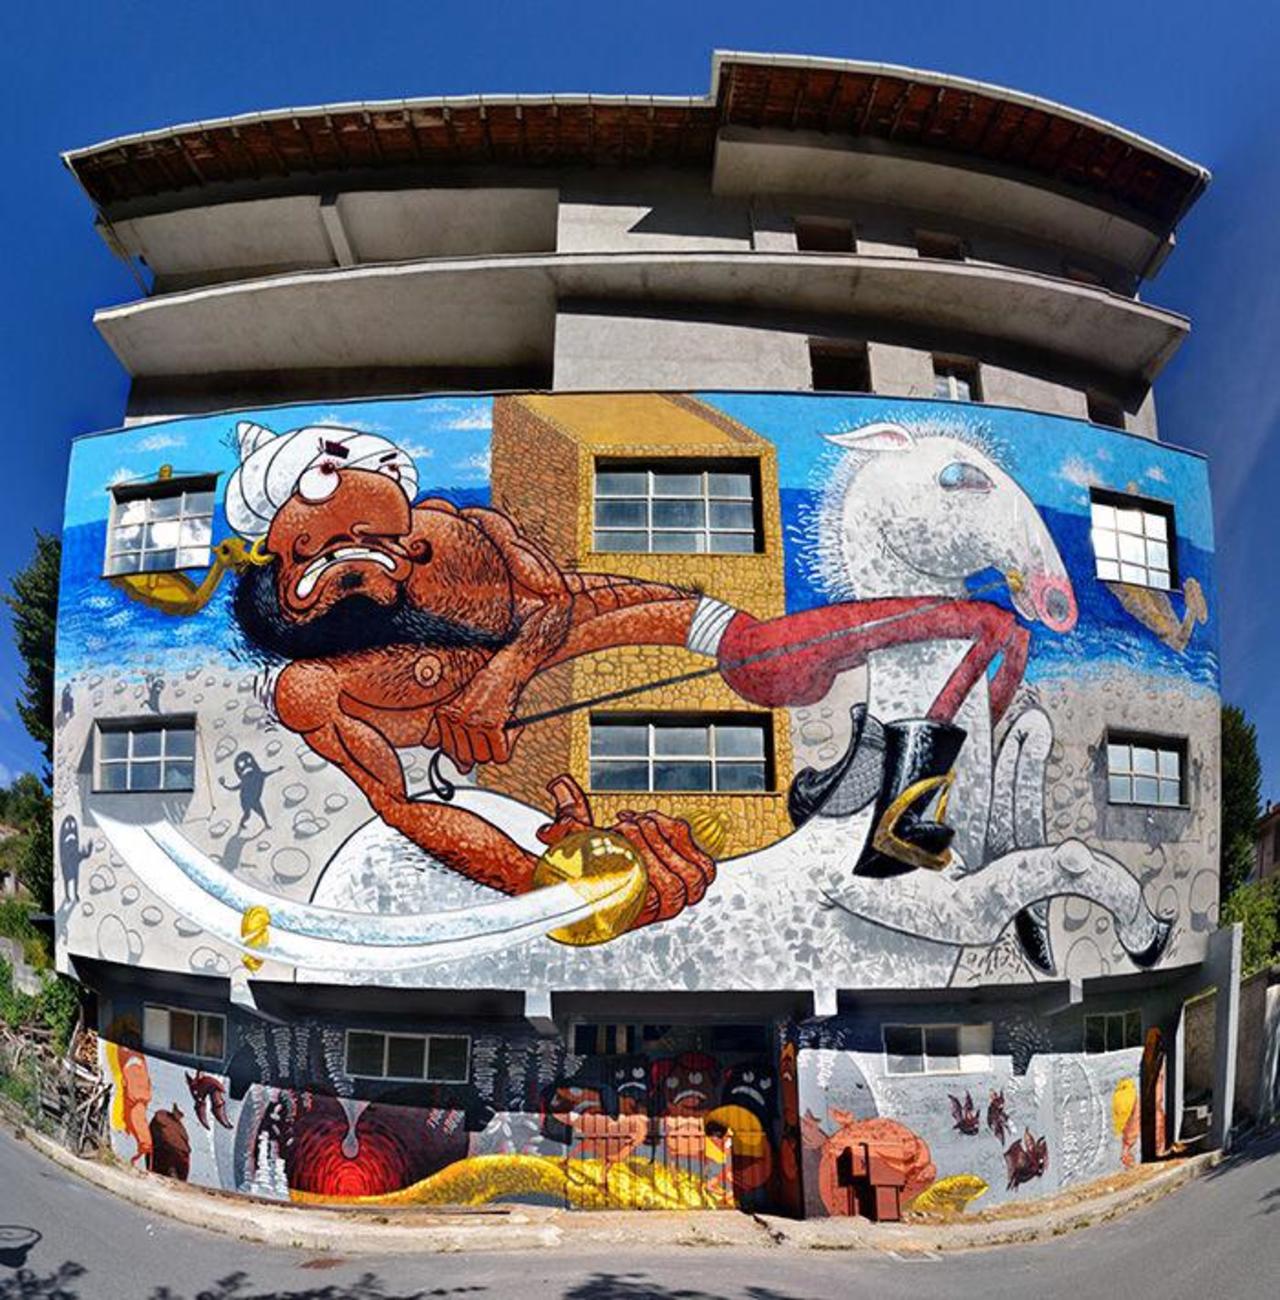 Mr Fijodor
Ormea, Italy

#StreetArt #art #graffiti #mural http://t.co/YDOaWyX3d2